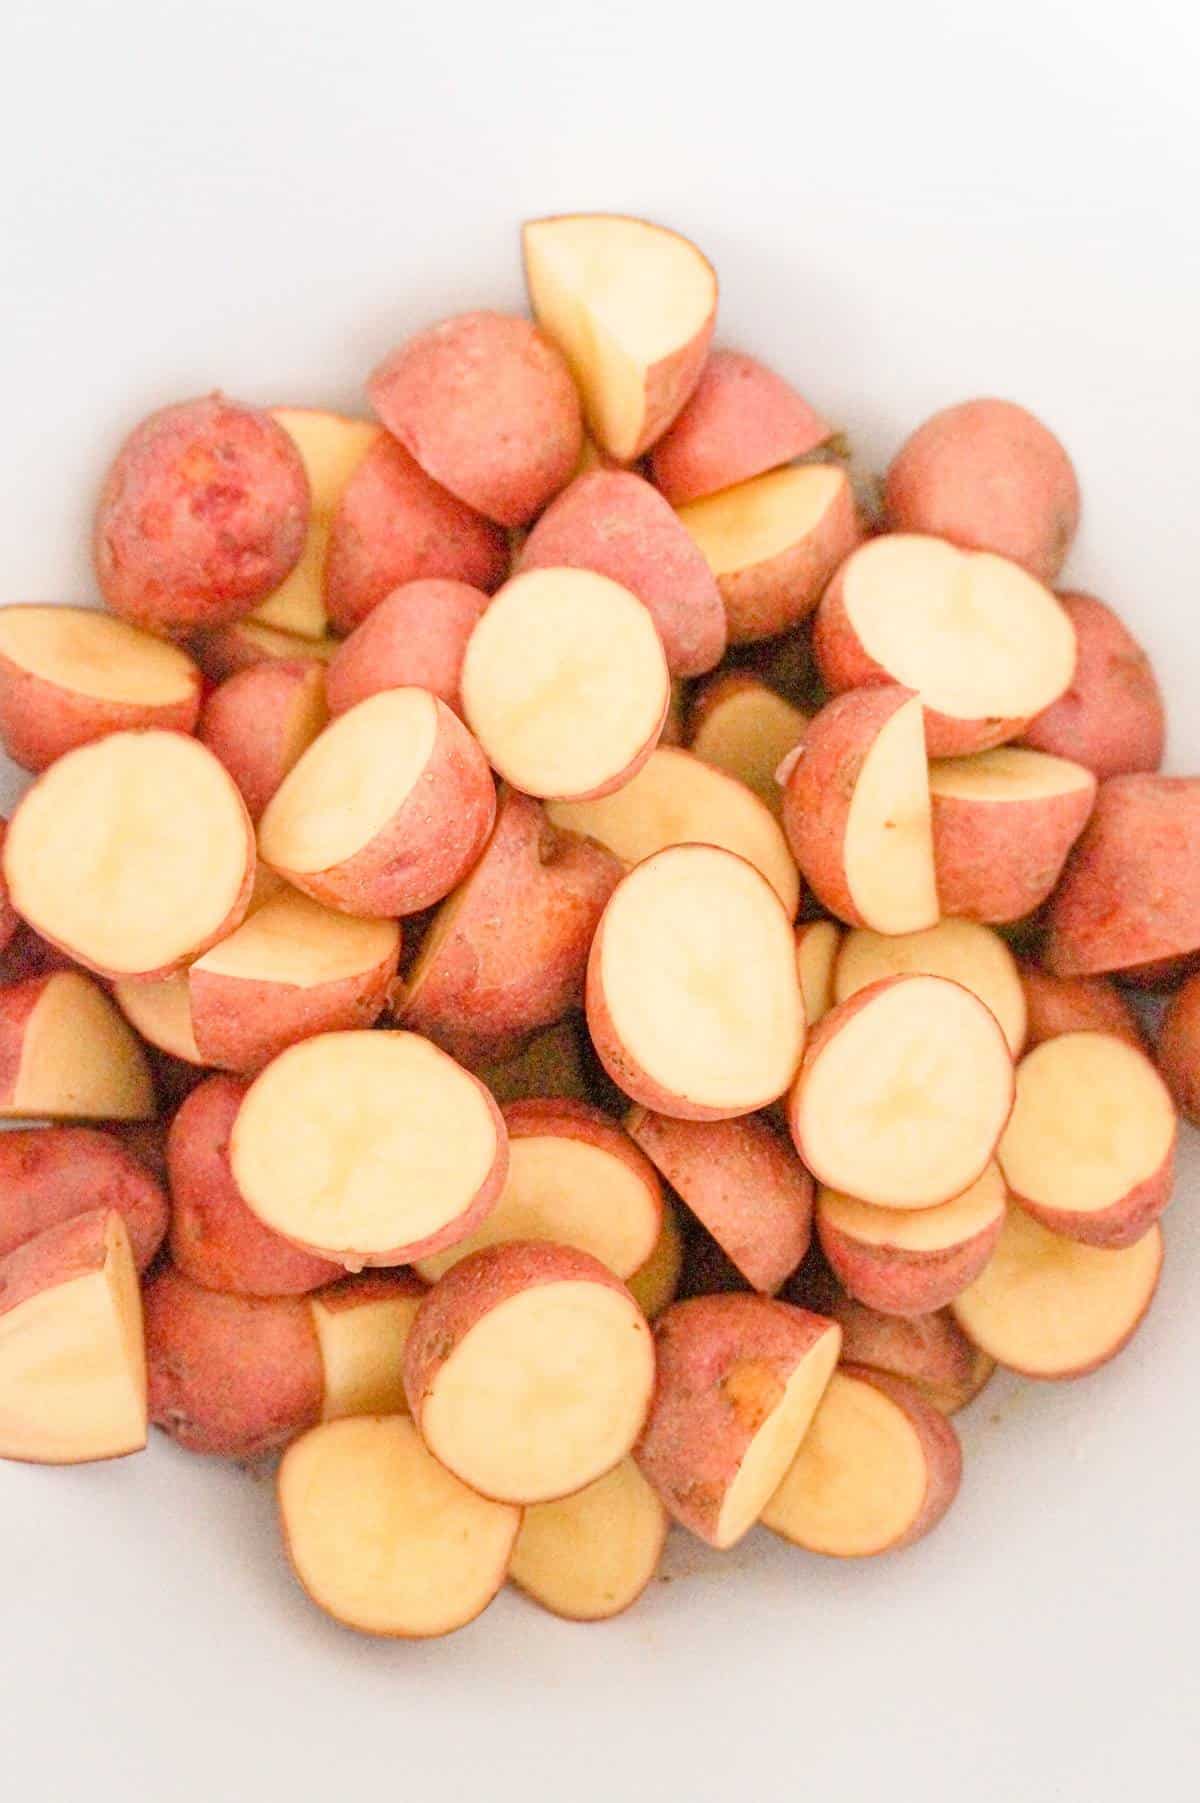 potato halves in a mixing bowl